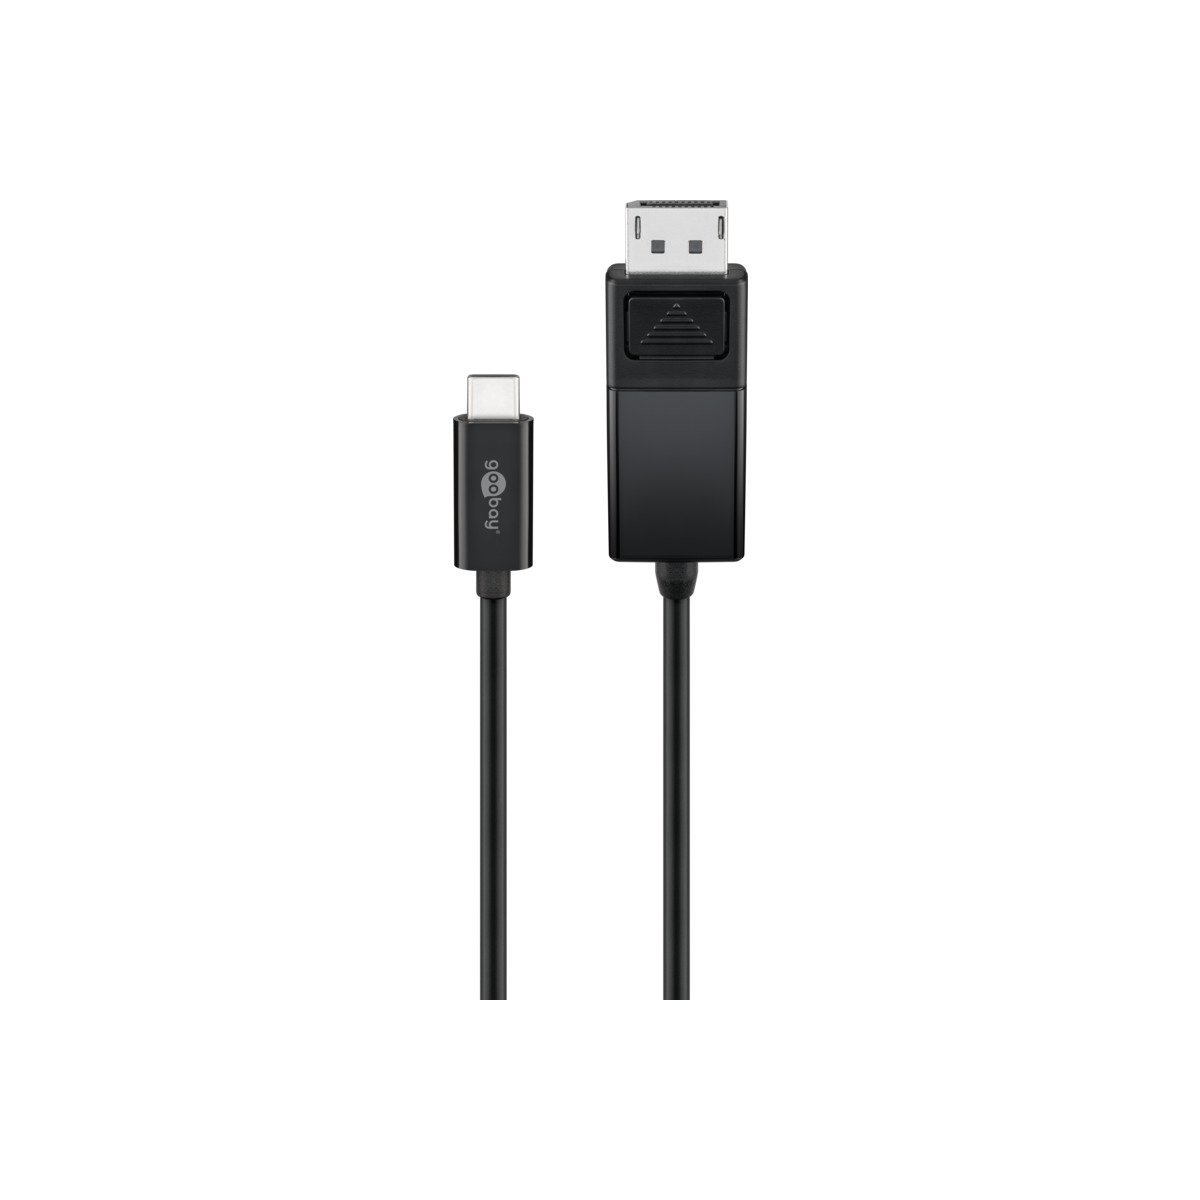 Goobay USB-C- DispPort adapt cable (4k 60 Hz) black 1.20m - Cables - Techunion -